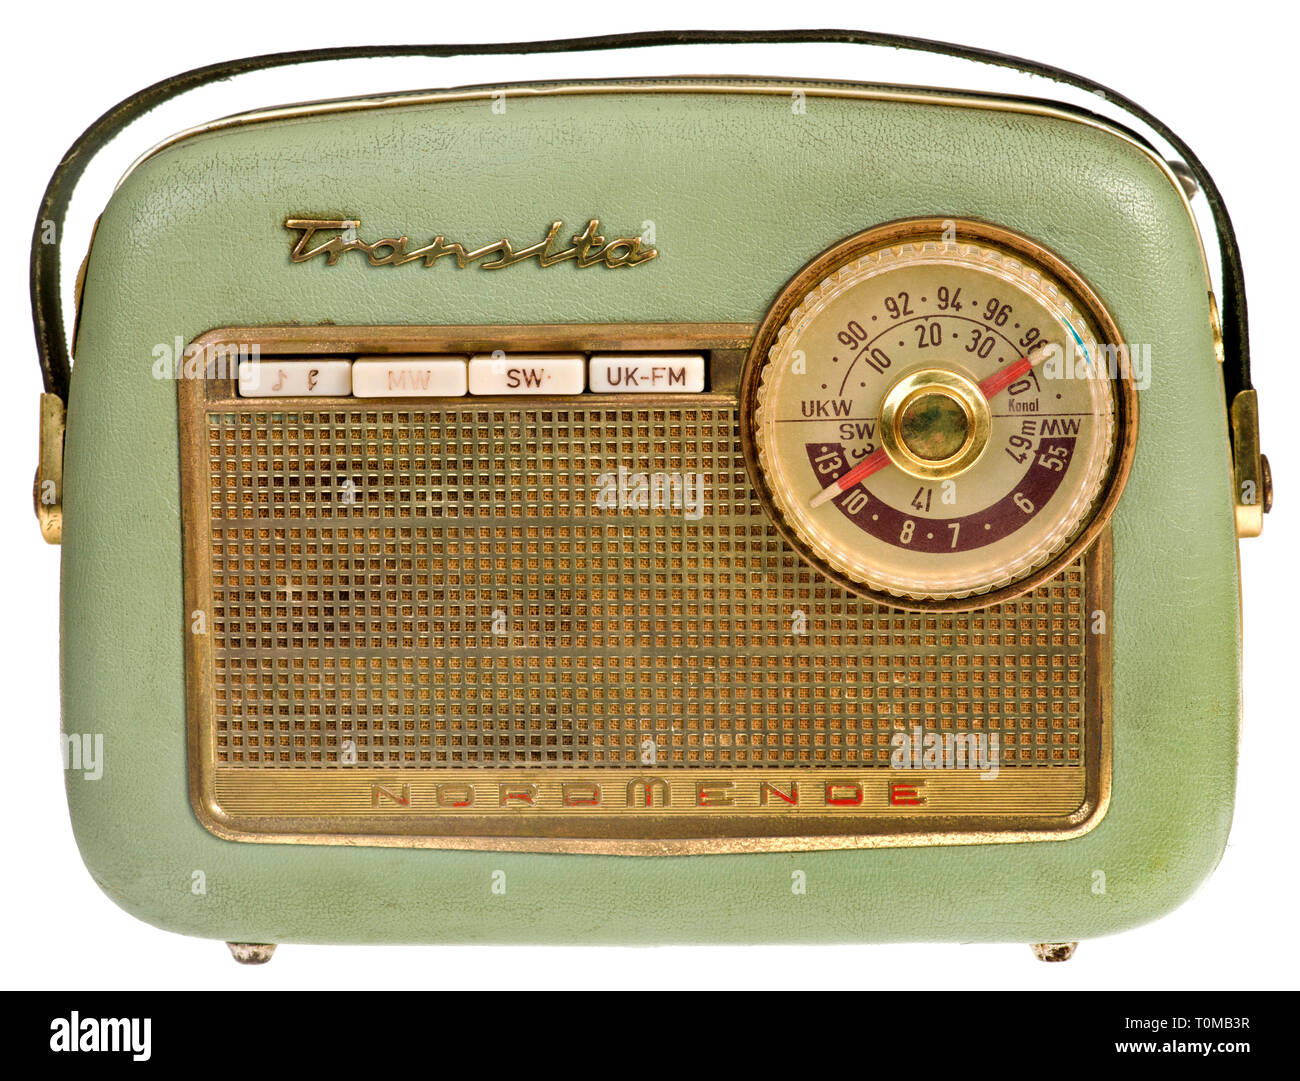 Rundfunk, Radio, tragbares Radio, Nordmende Transita, Deutschland, 1960,  Additional-Rights - Clearance-Info - Not-Available Stockfotografie - Alamy